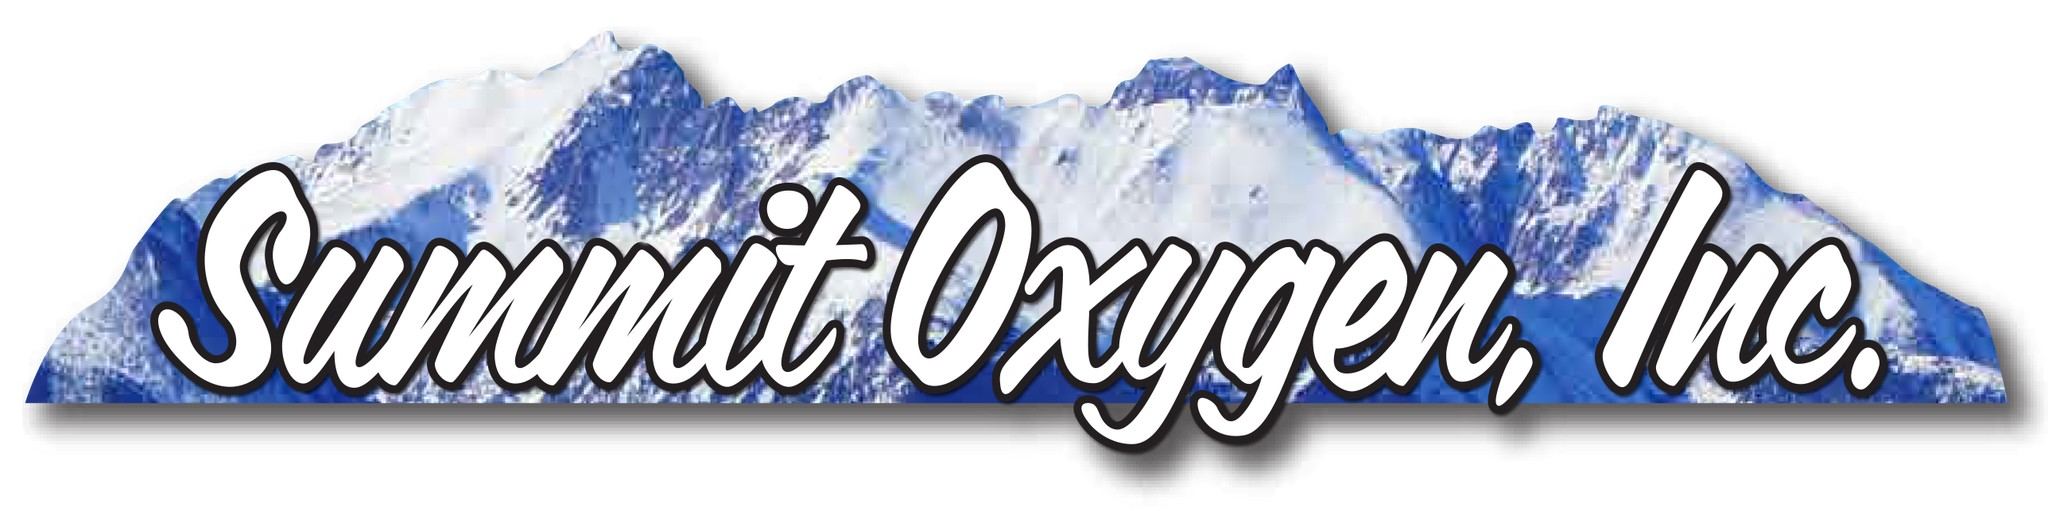 Summit Oxygen, Inc